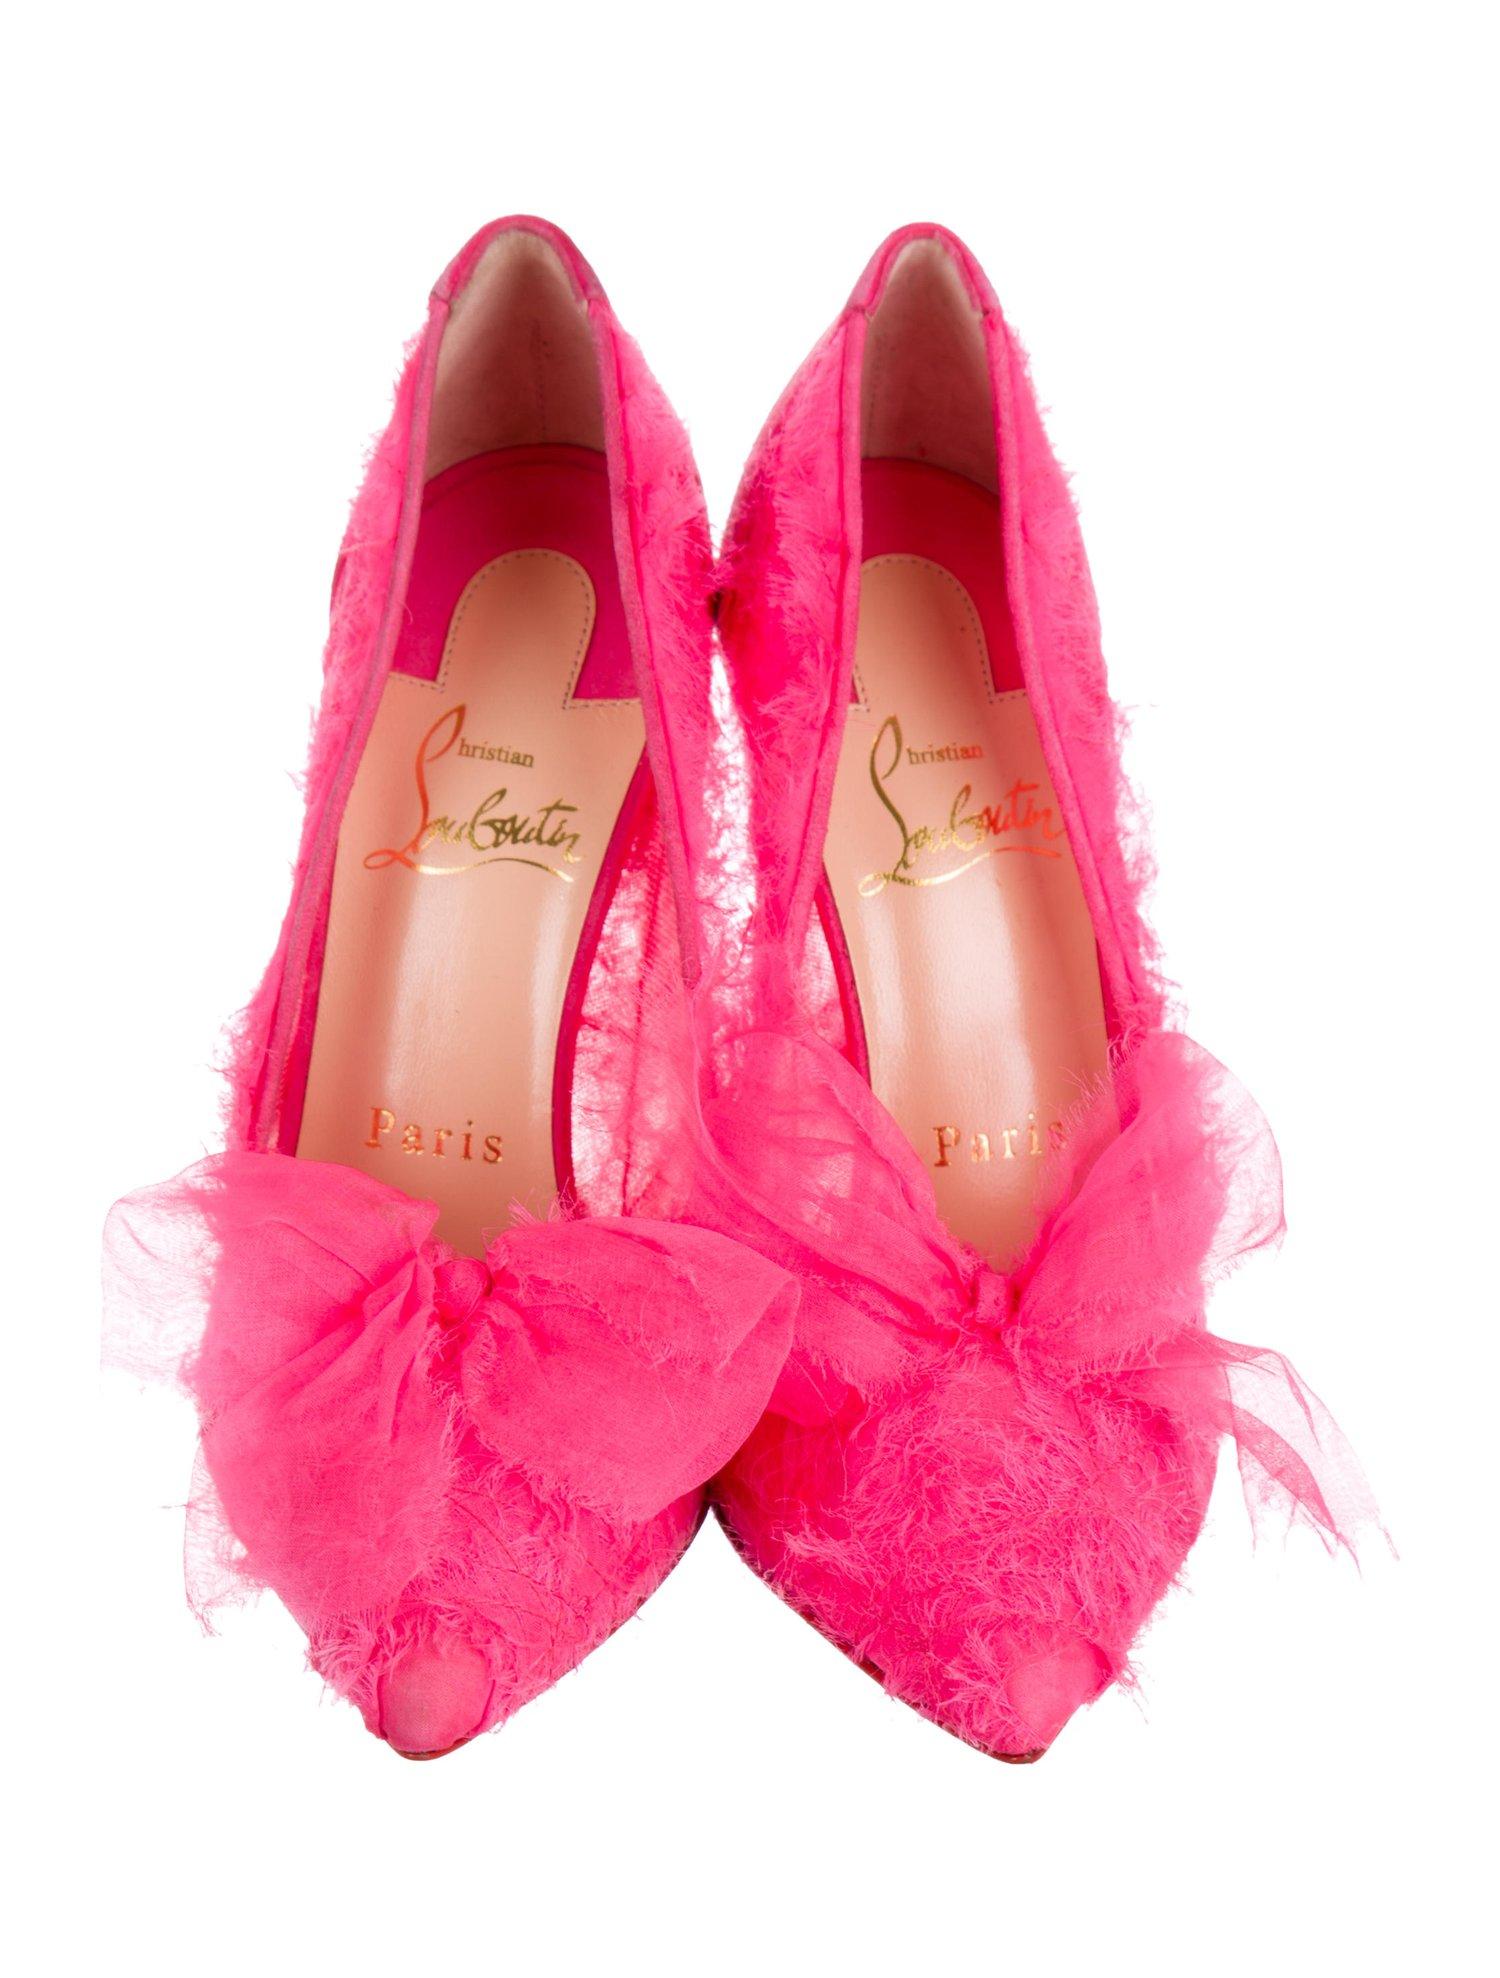 Women's Christian Louboutin NEW Pink Suede Woven Chiffon Evening Heels Pumps in Box